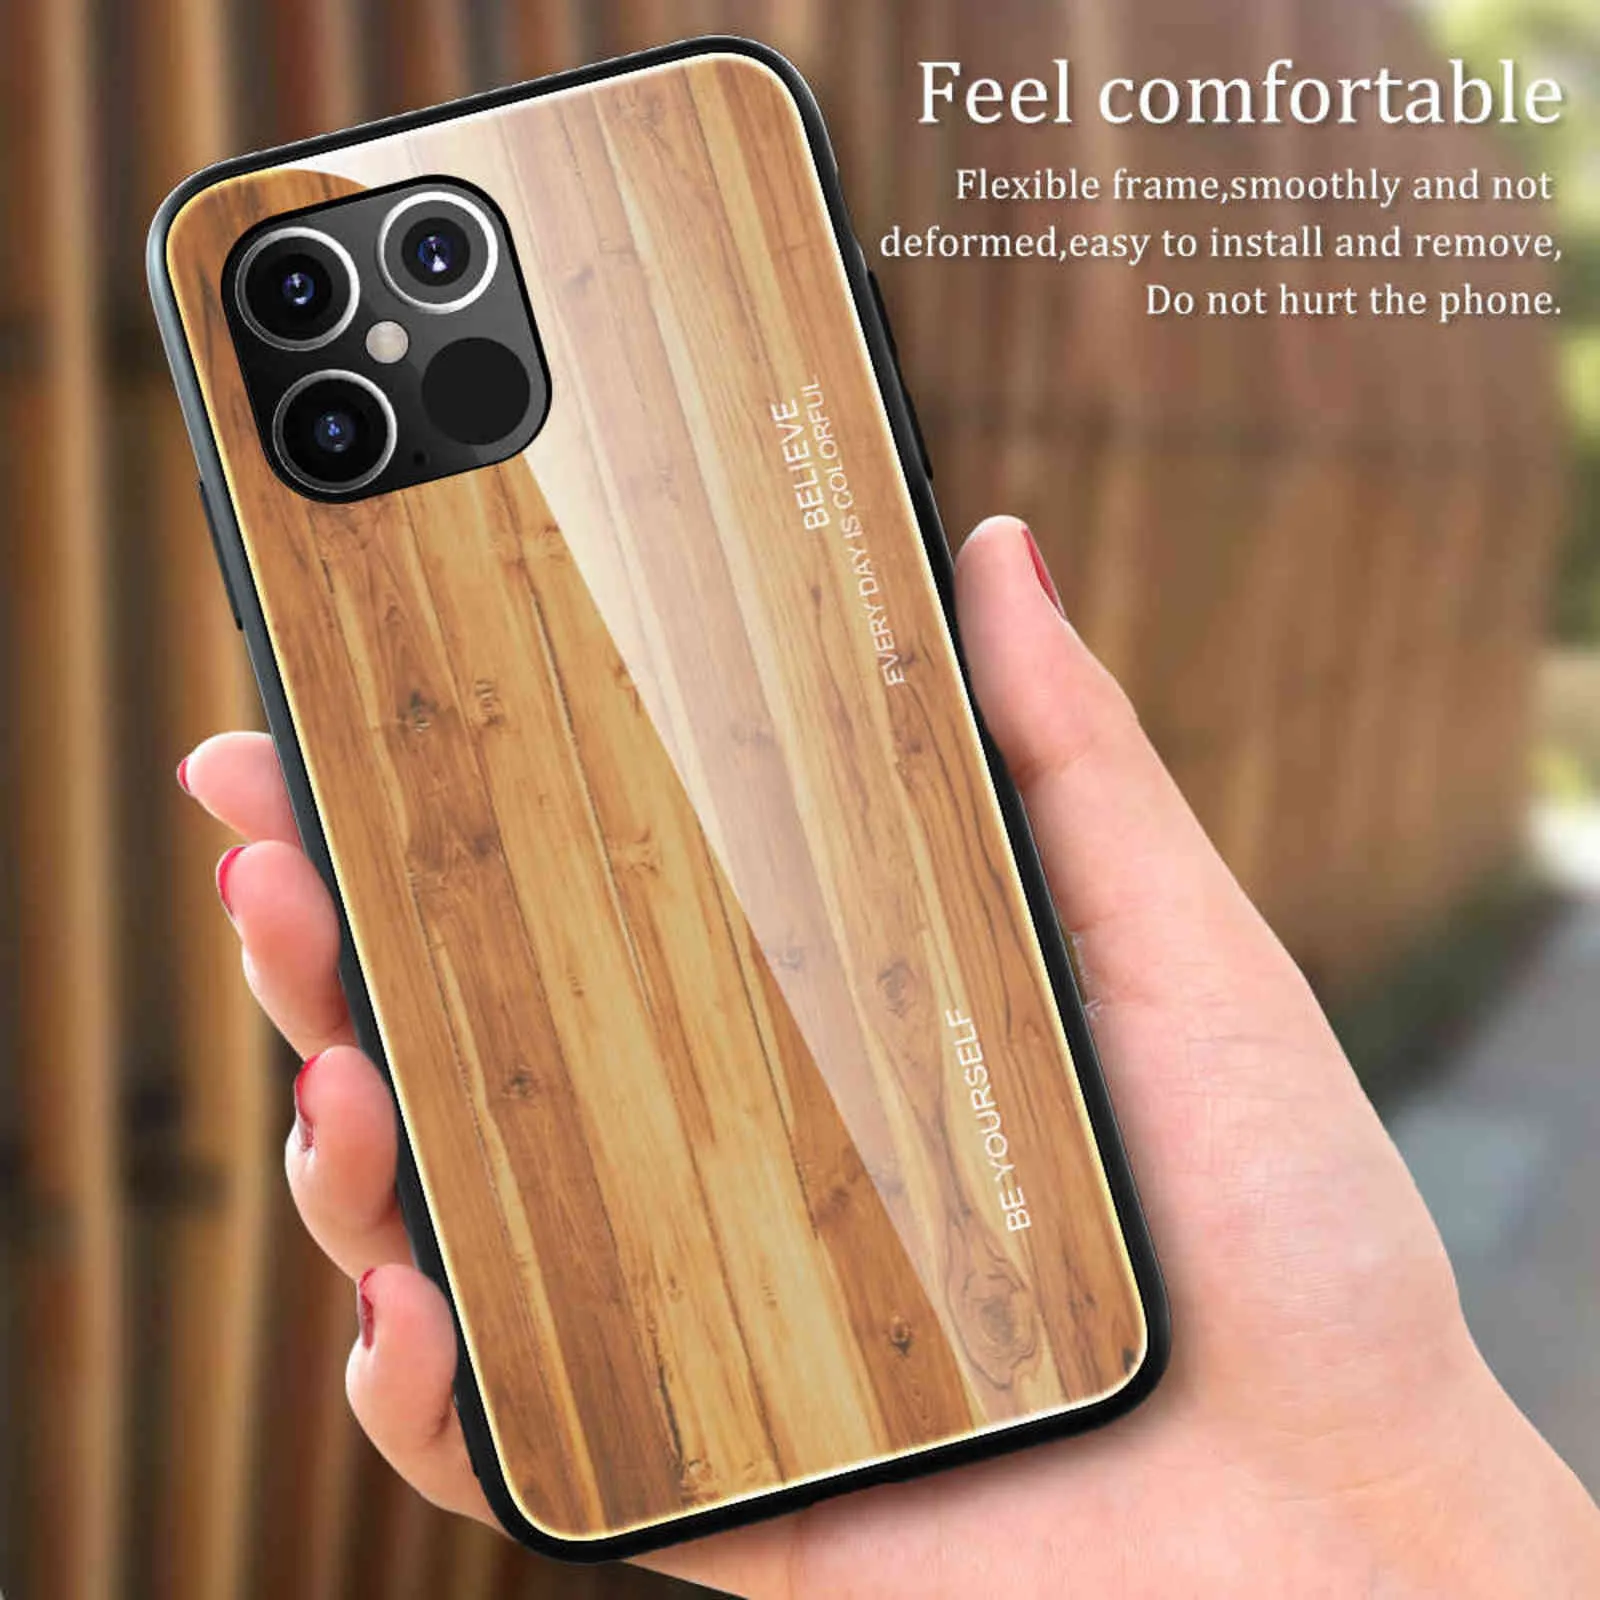 Capa de telefone de grão de madeira para iphone 11 12 13 pro max 12 mini se caso de vidro temperado para iphone xr xs max x 6s 7 8 plus capa y4568883